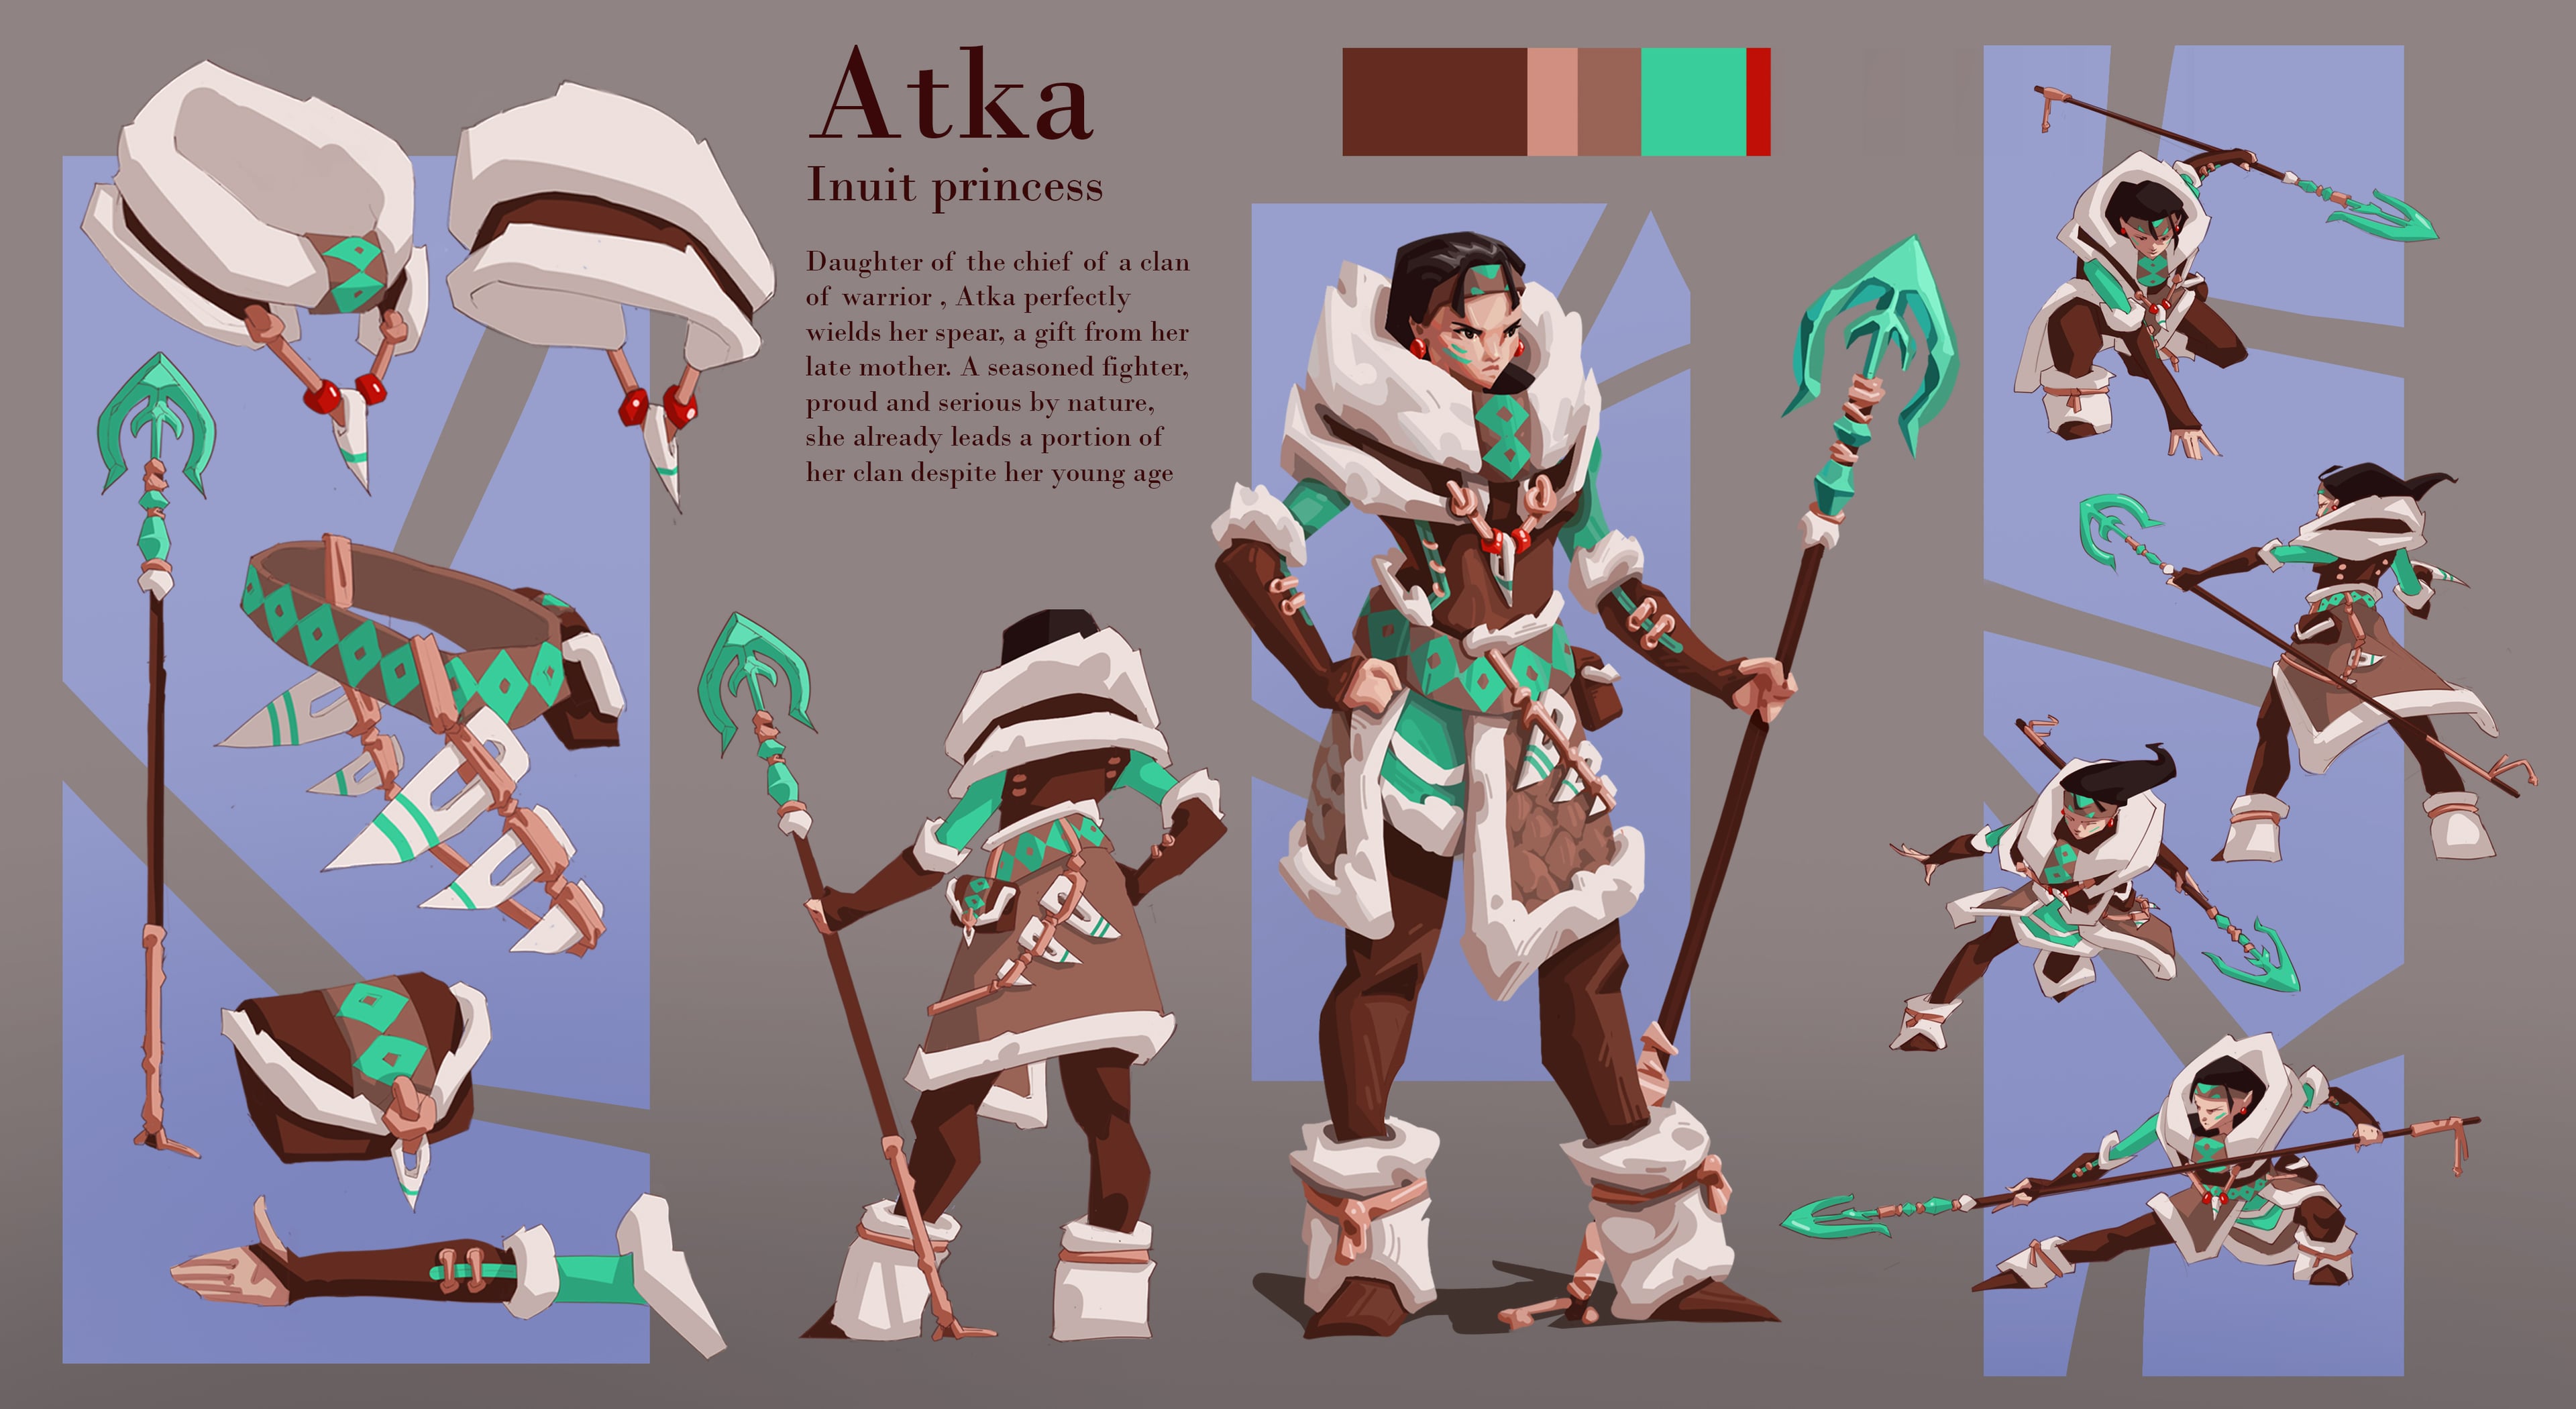 Atka, the inuit princess par Acrimus